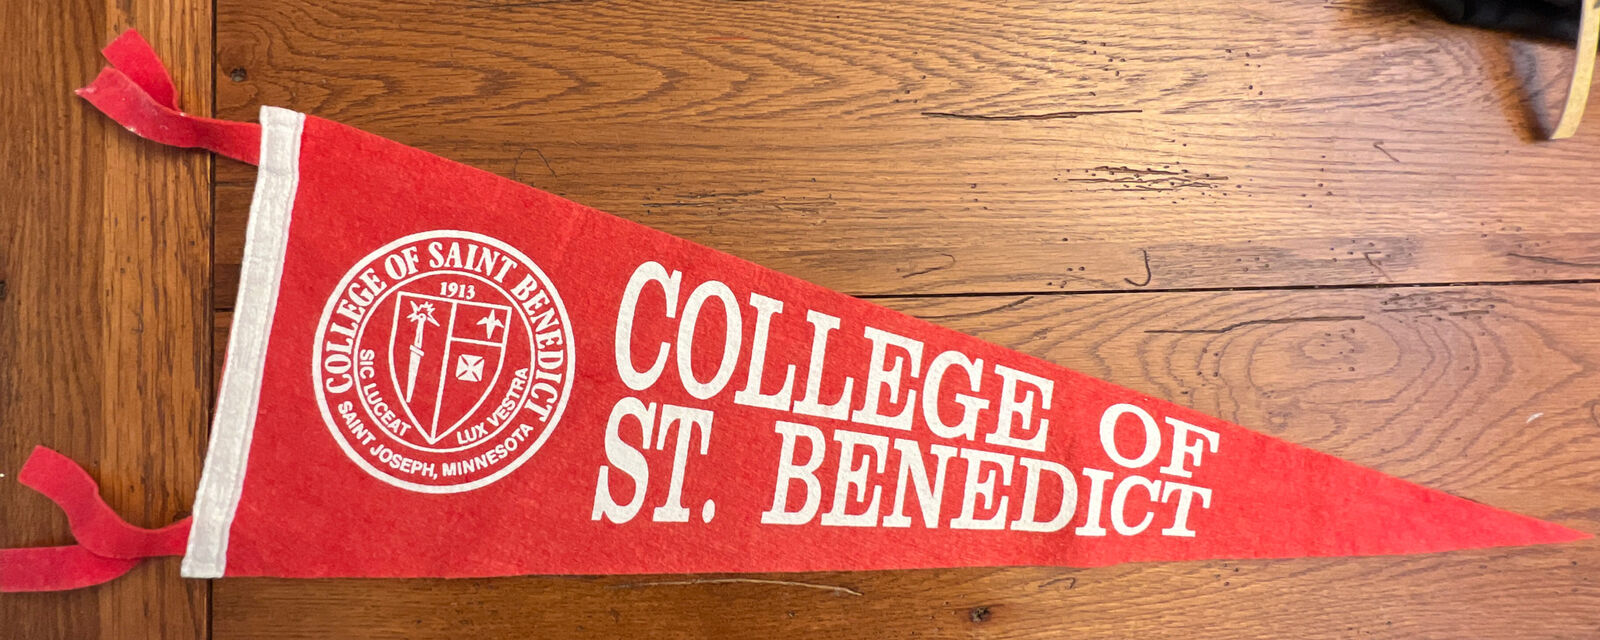 College of St. Benedict Felt Pennant Saint Joseph, Minnesota